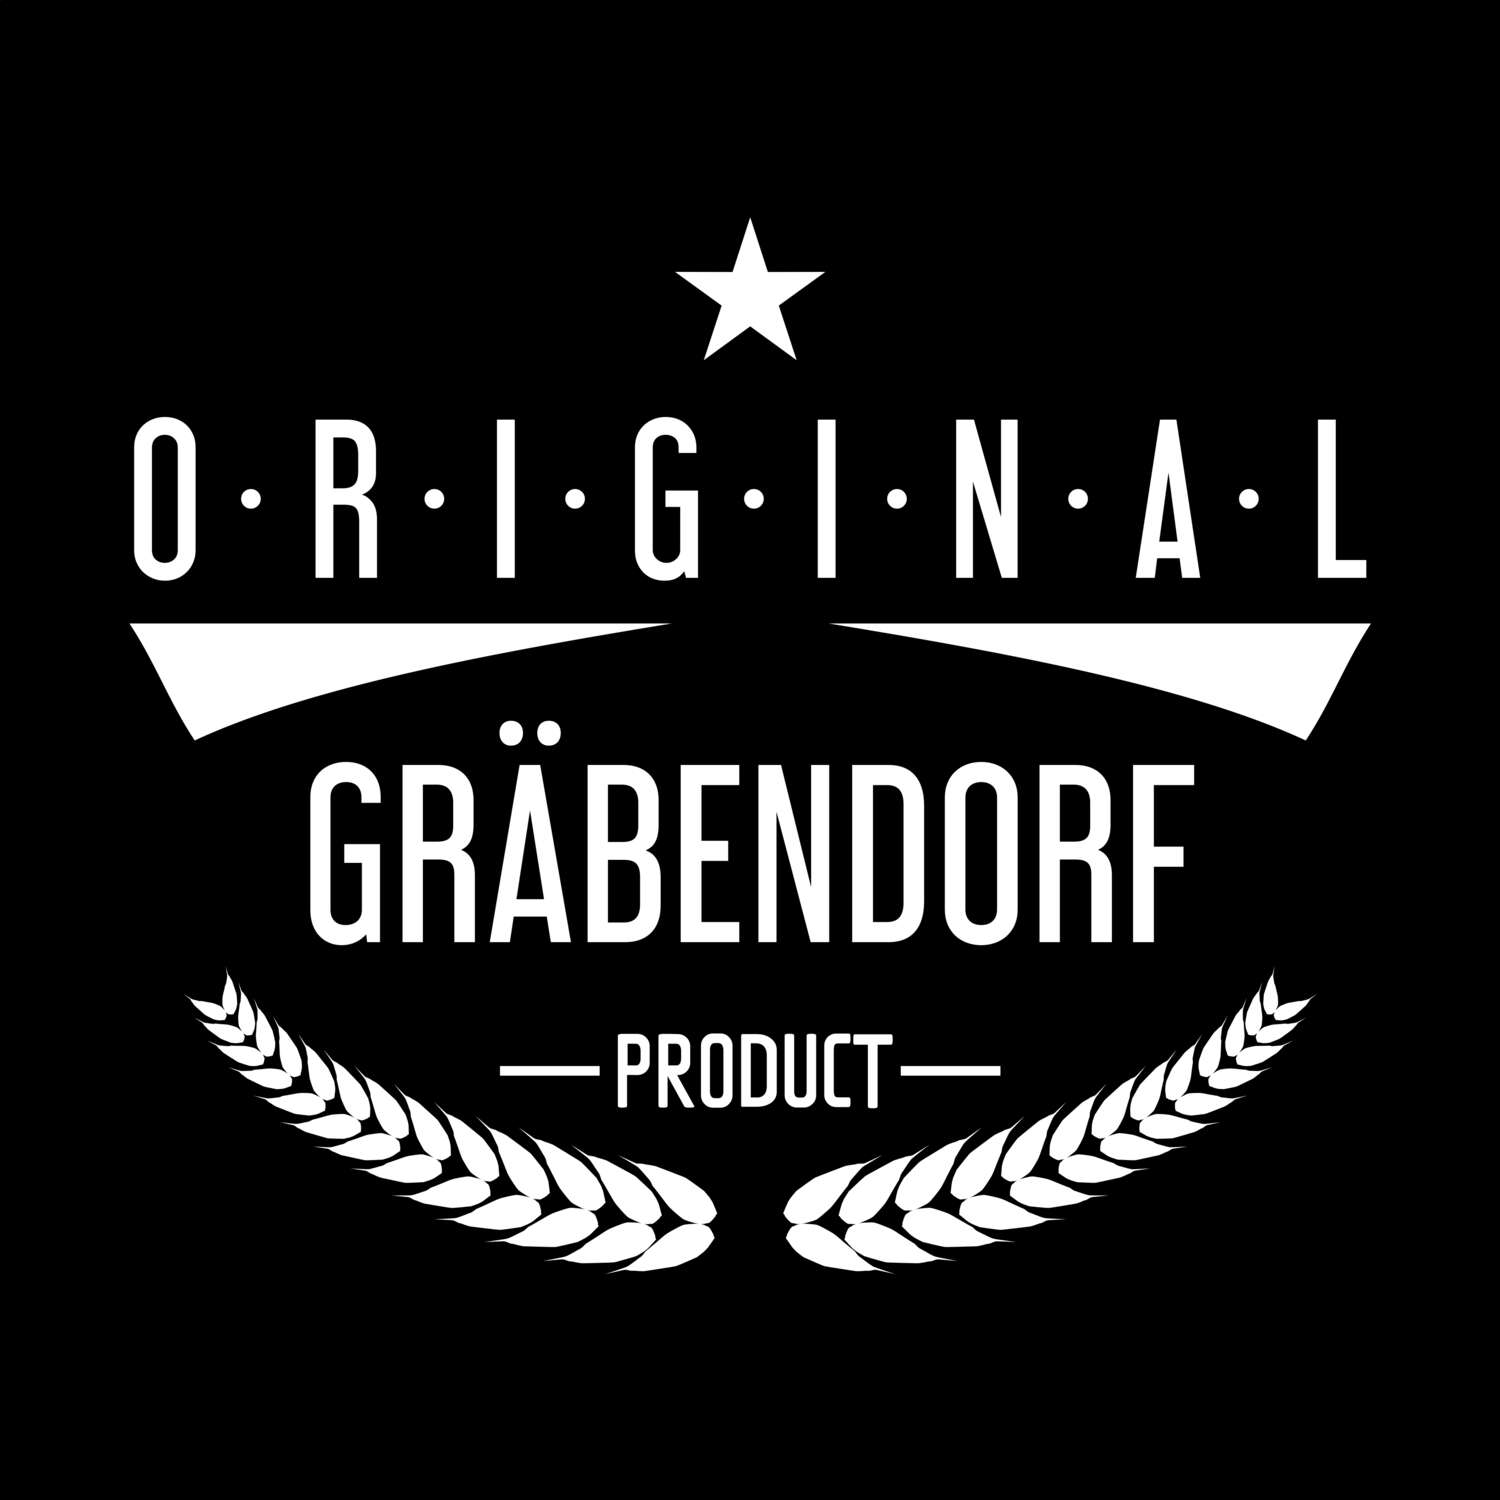 Gräbendorf T-Shirt »Original Product«